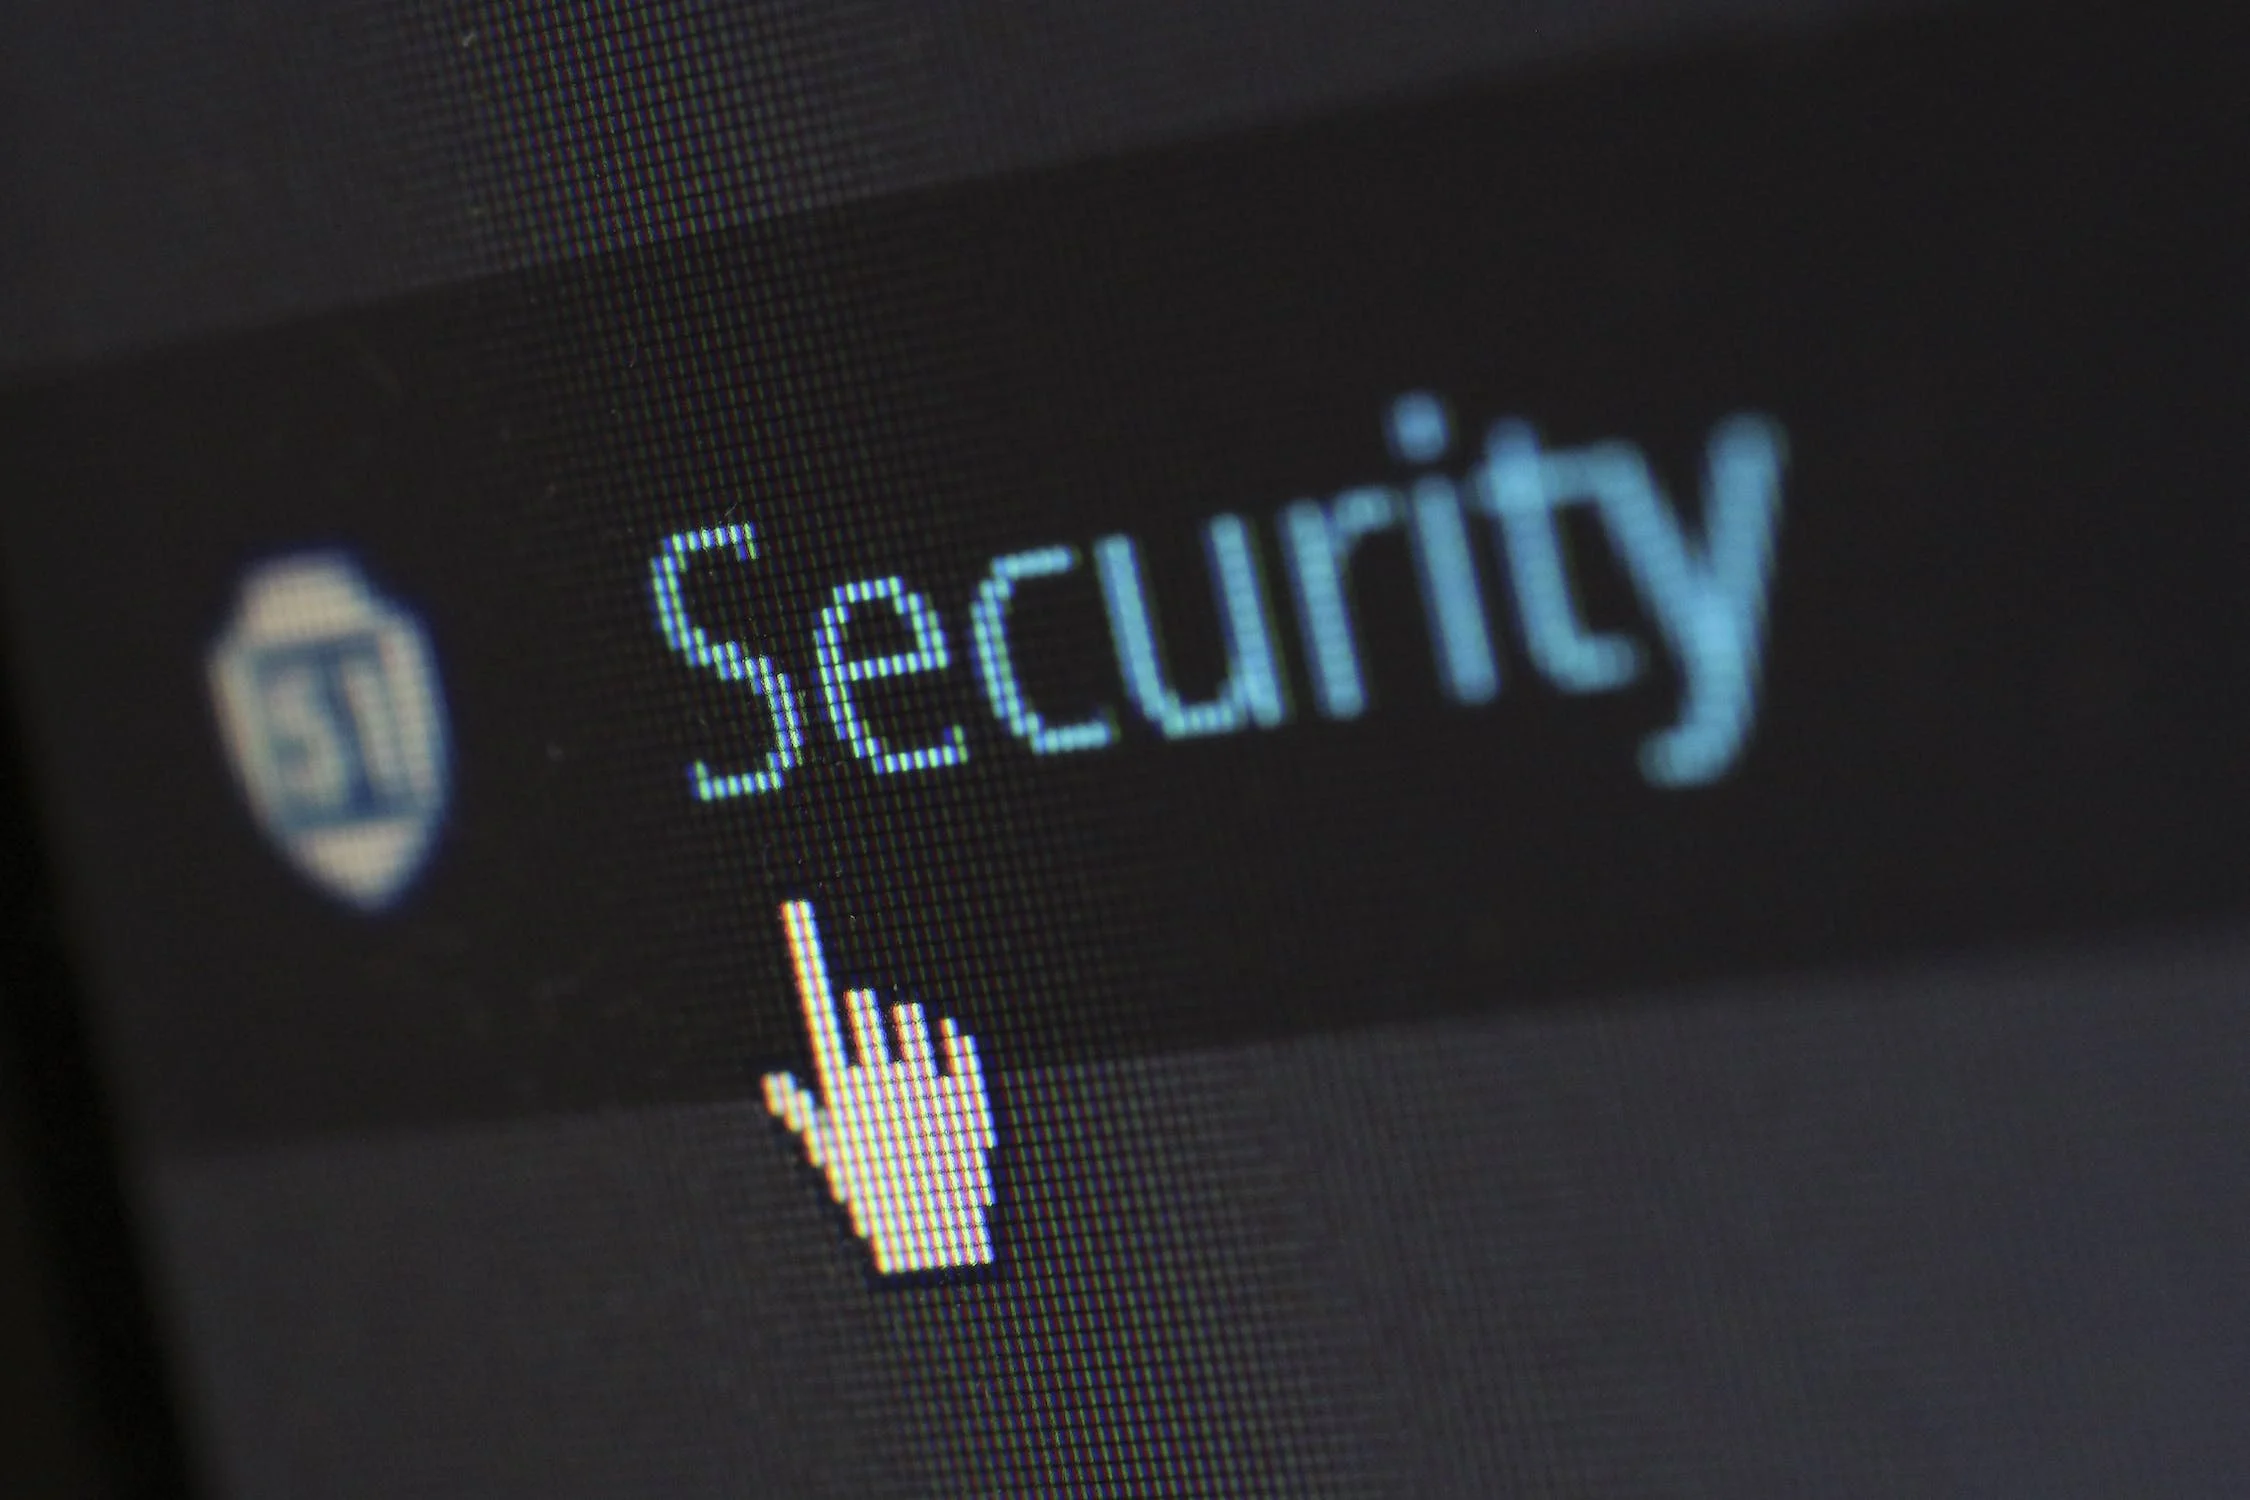 Security logo on a computer screen